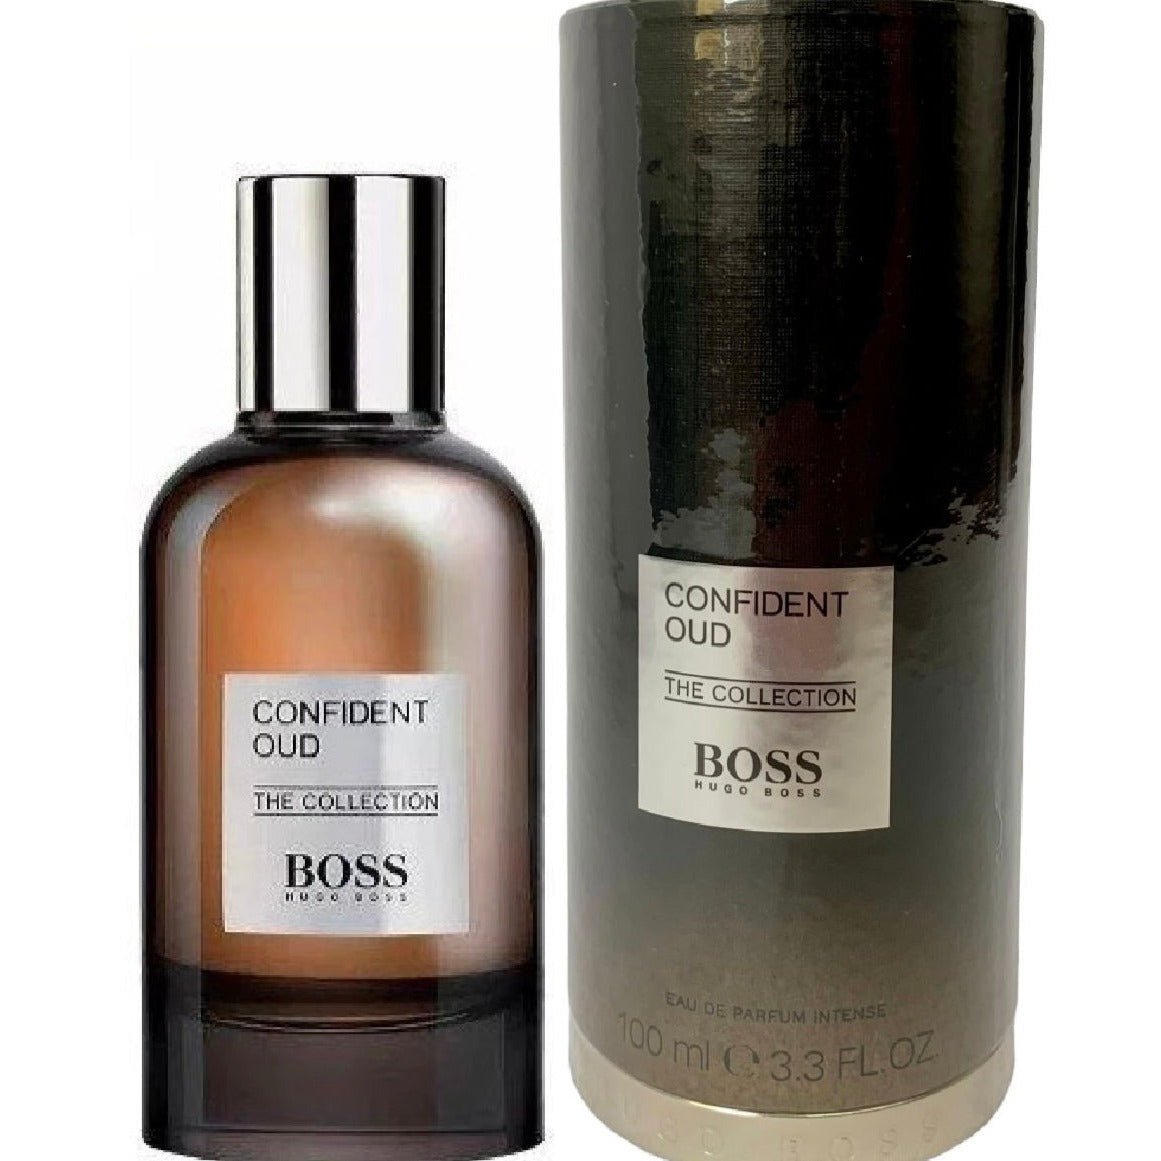 Hugo Boss Boss The Collection Confident Oud EDP Intense | My Perfume Shop Australia